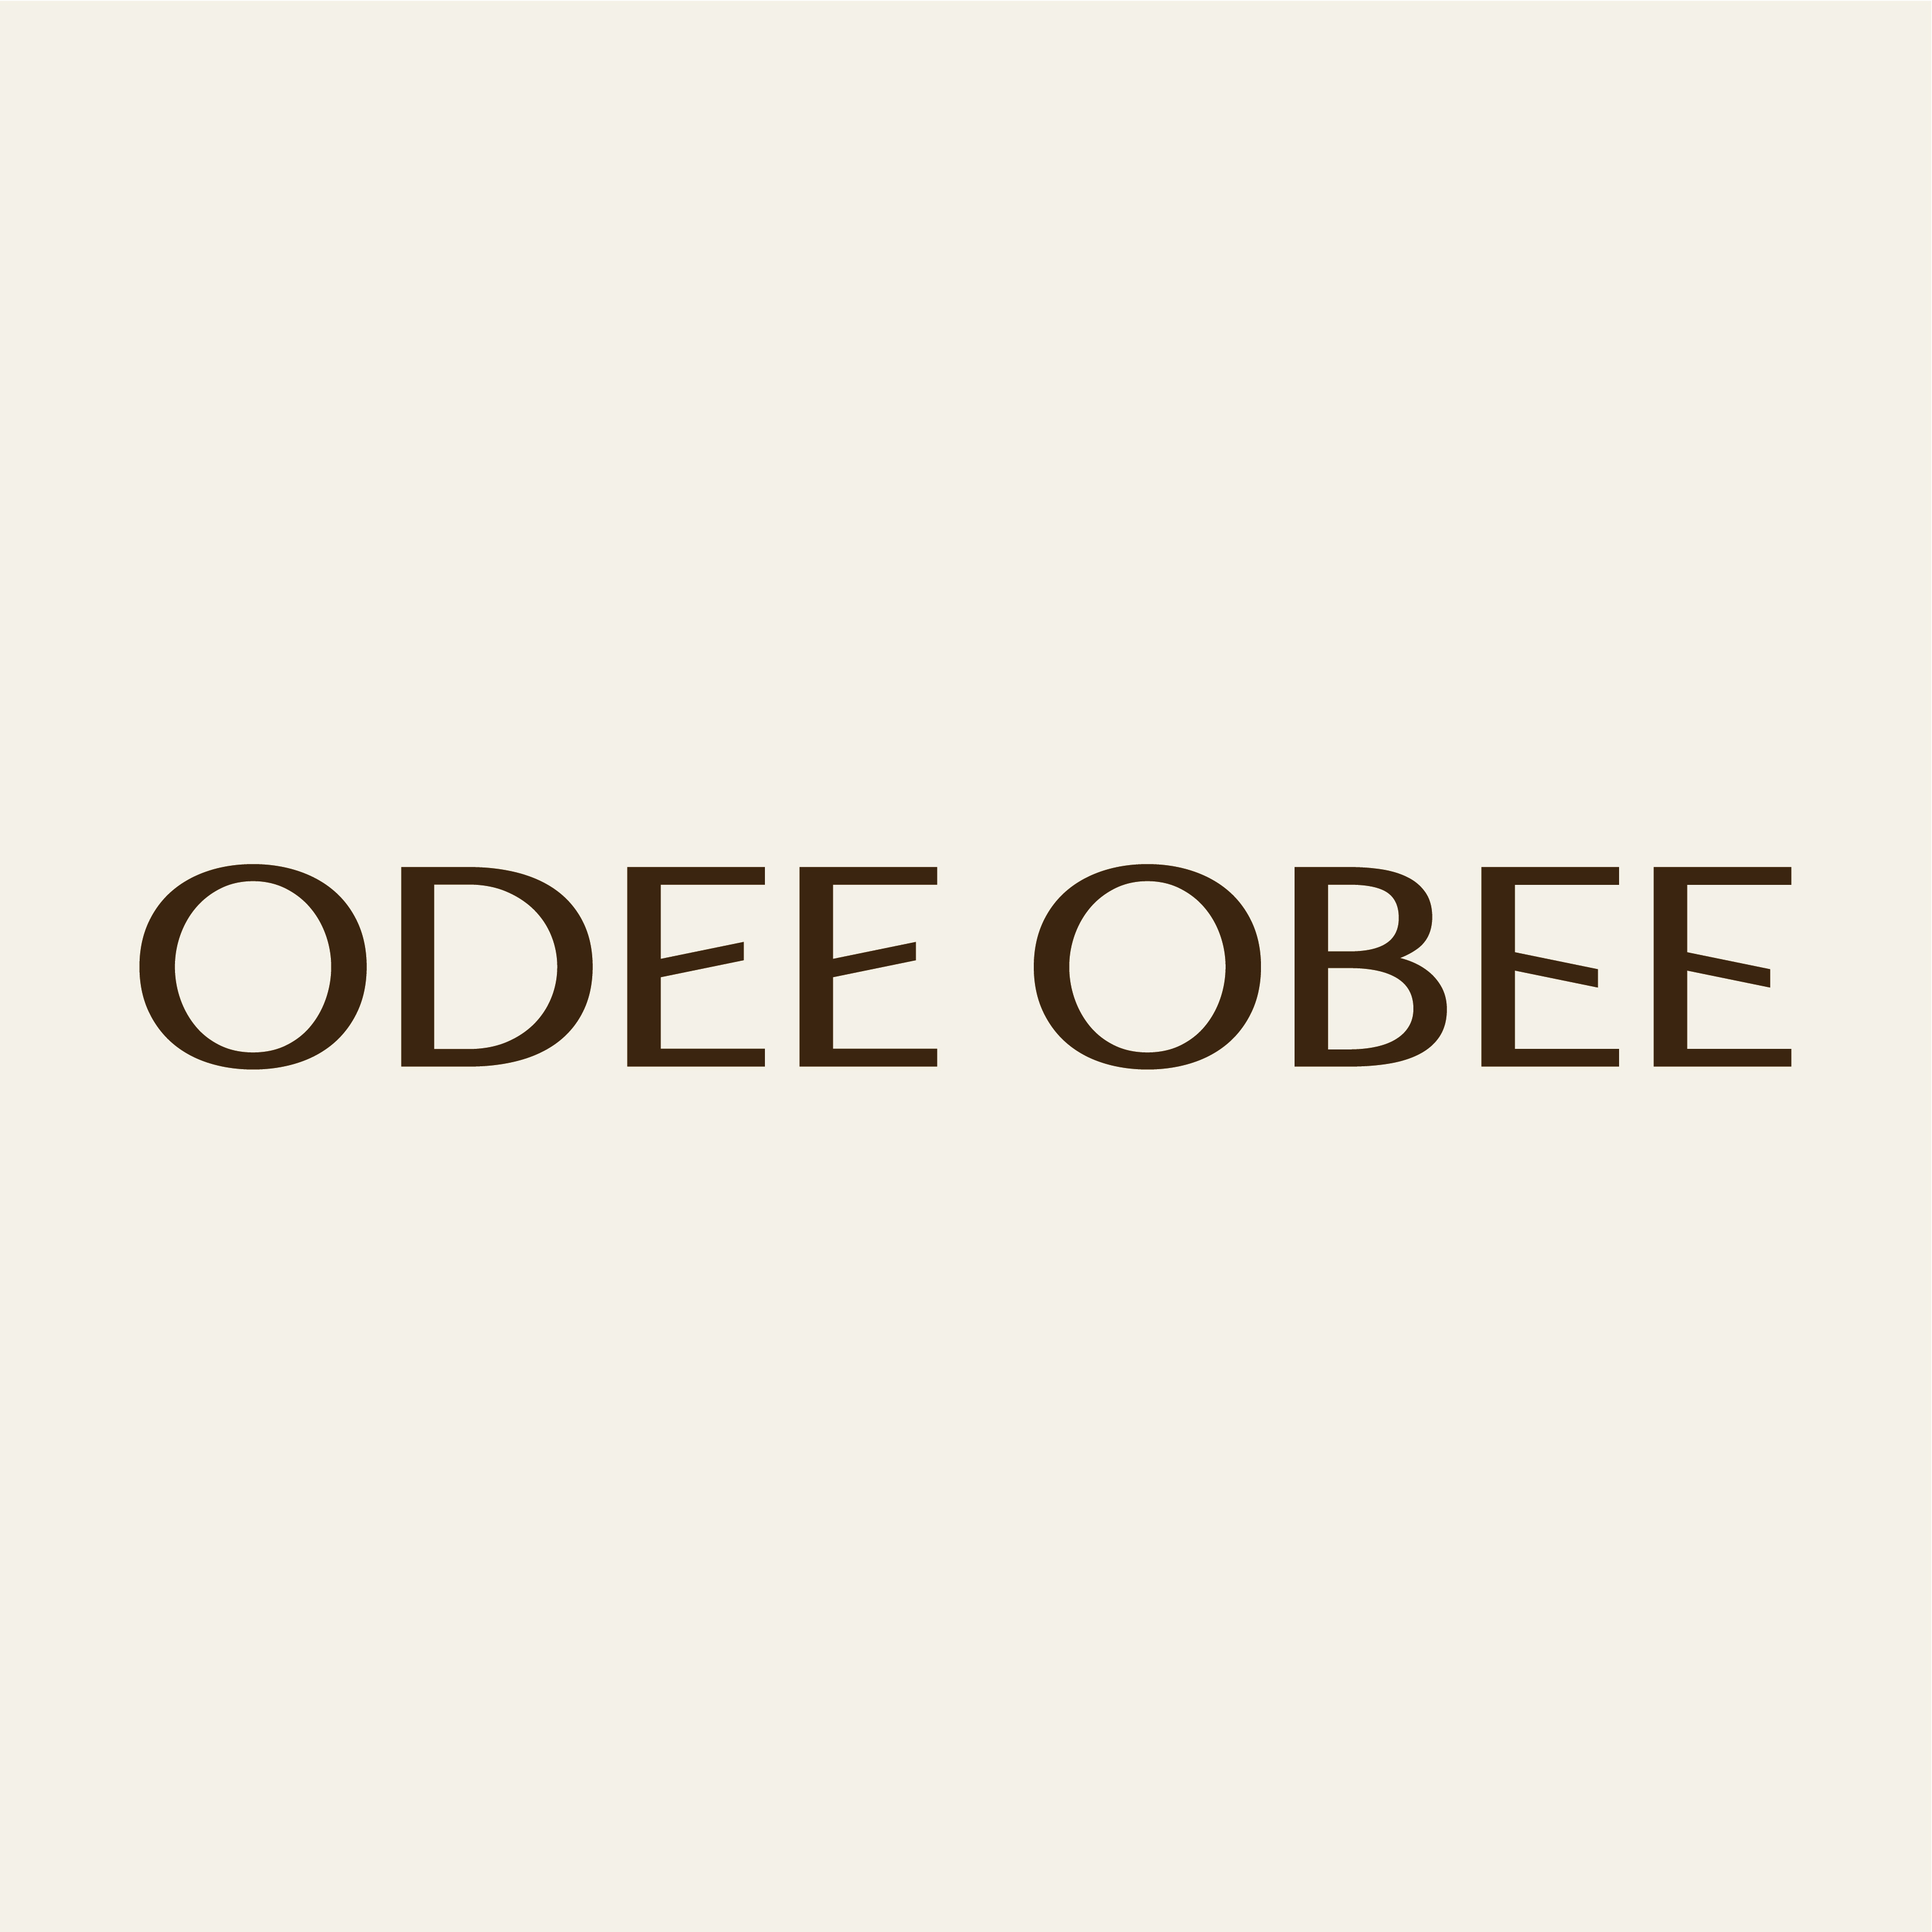 ODEEOBEE海外化妆品有限公司